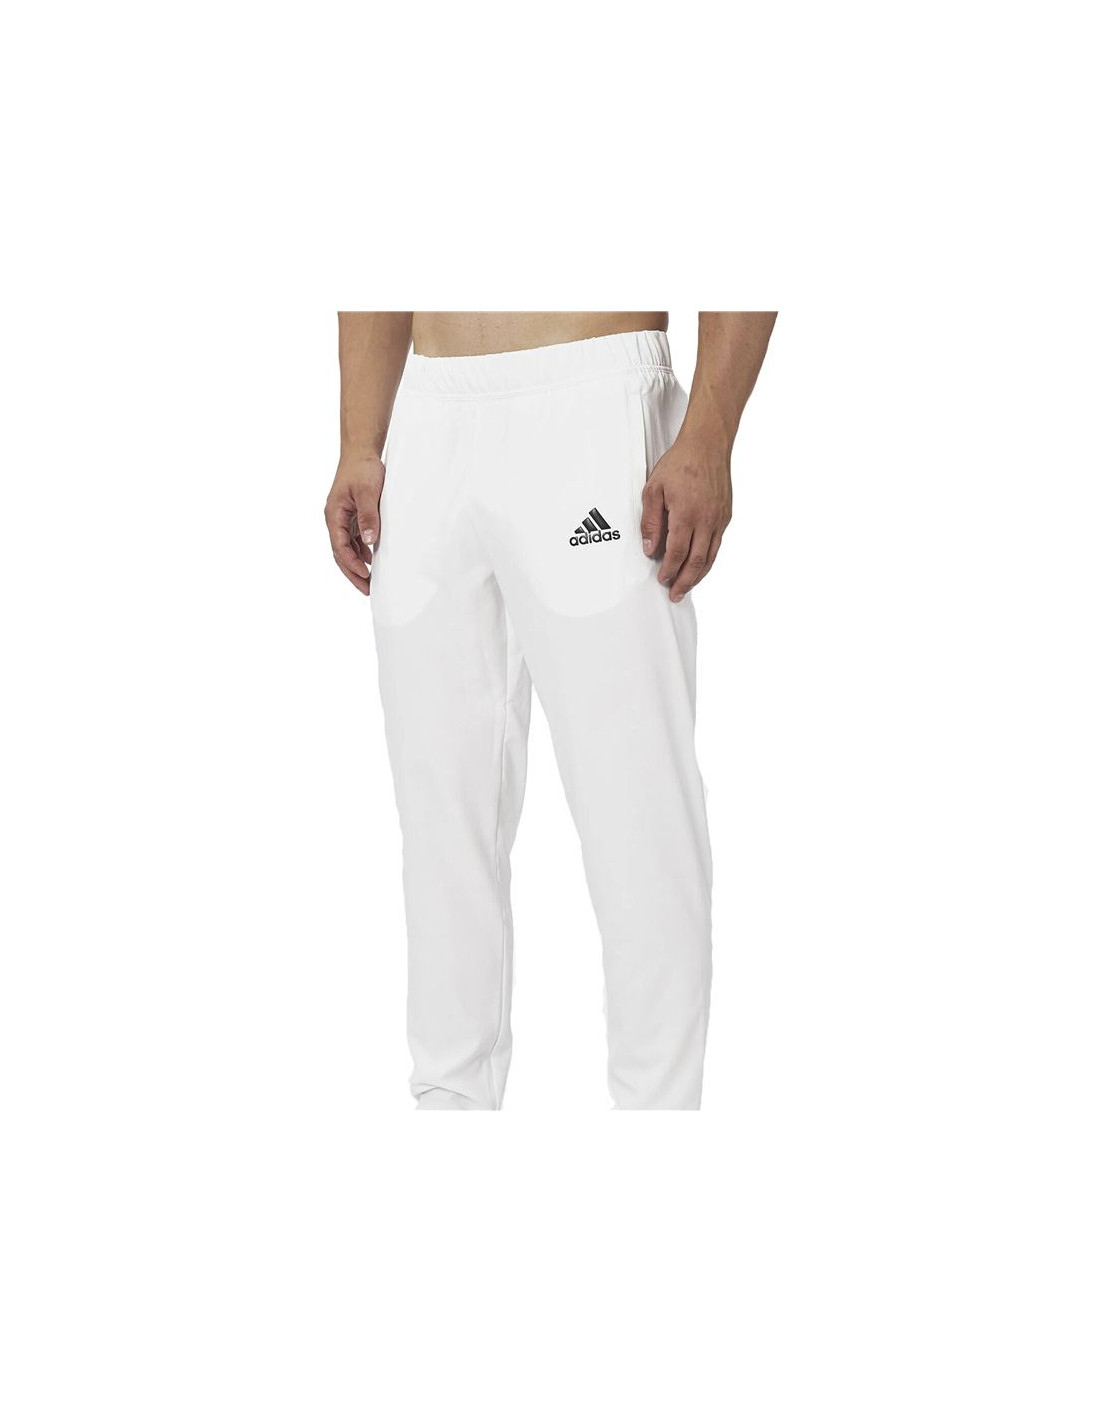 Pantalones adidas melbourne tennis hombre white